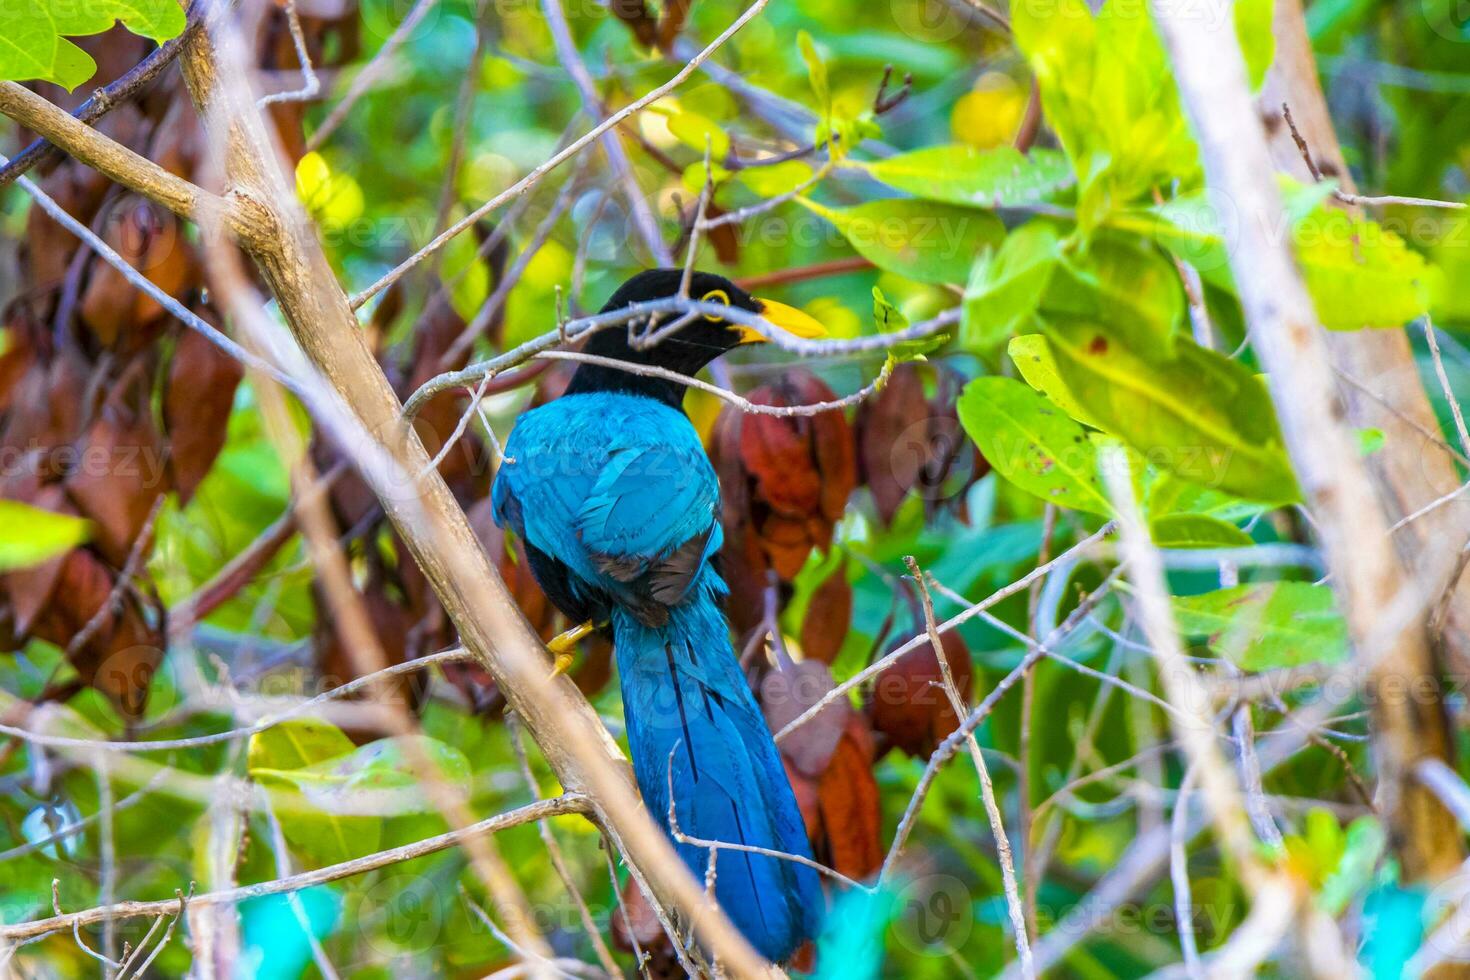 Yucatan jay bird birds in trees tropical jungle nature Mexico. photo